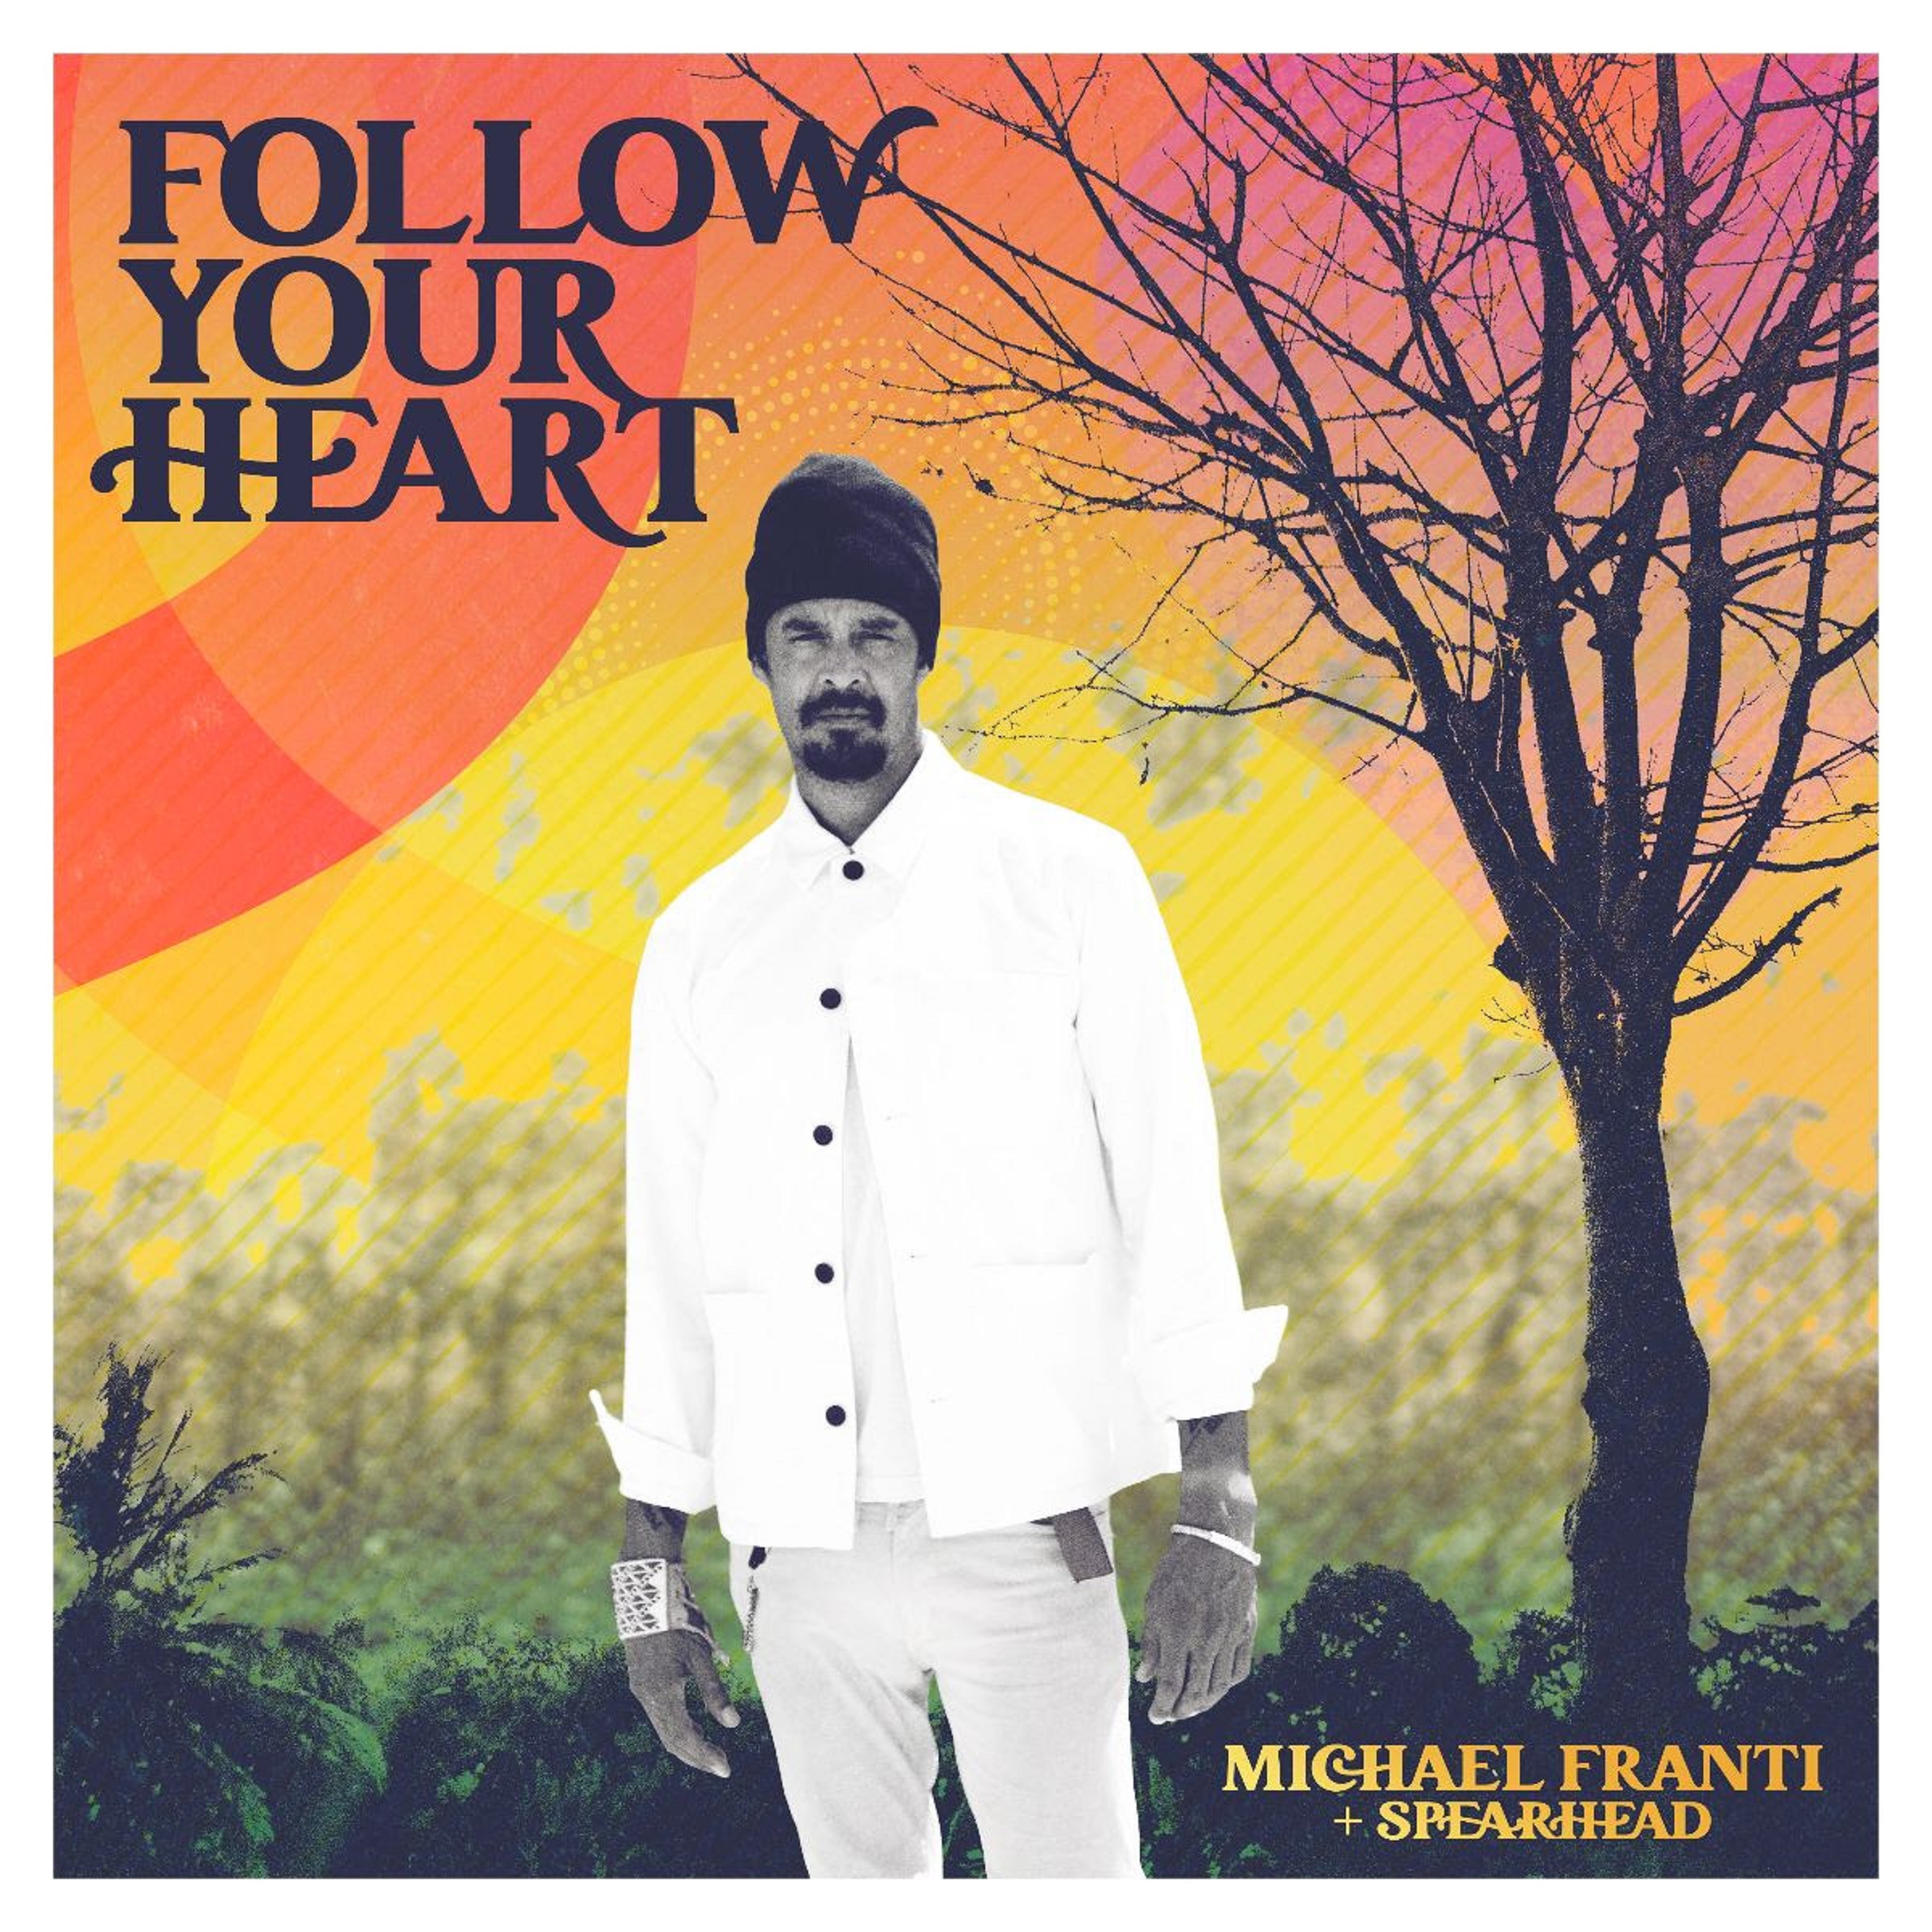 Michael Franti & Spearhead announce new album 'Follow Your Heart'